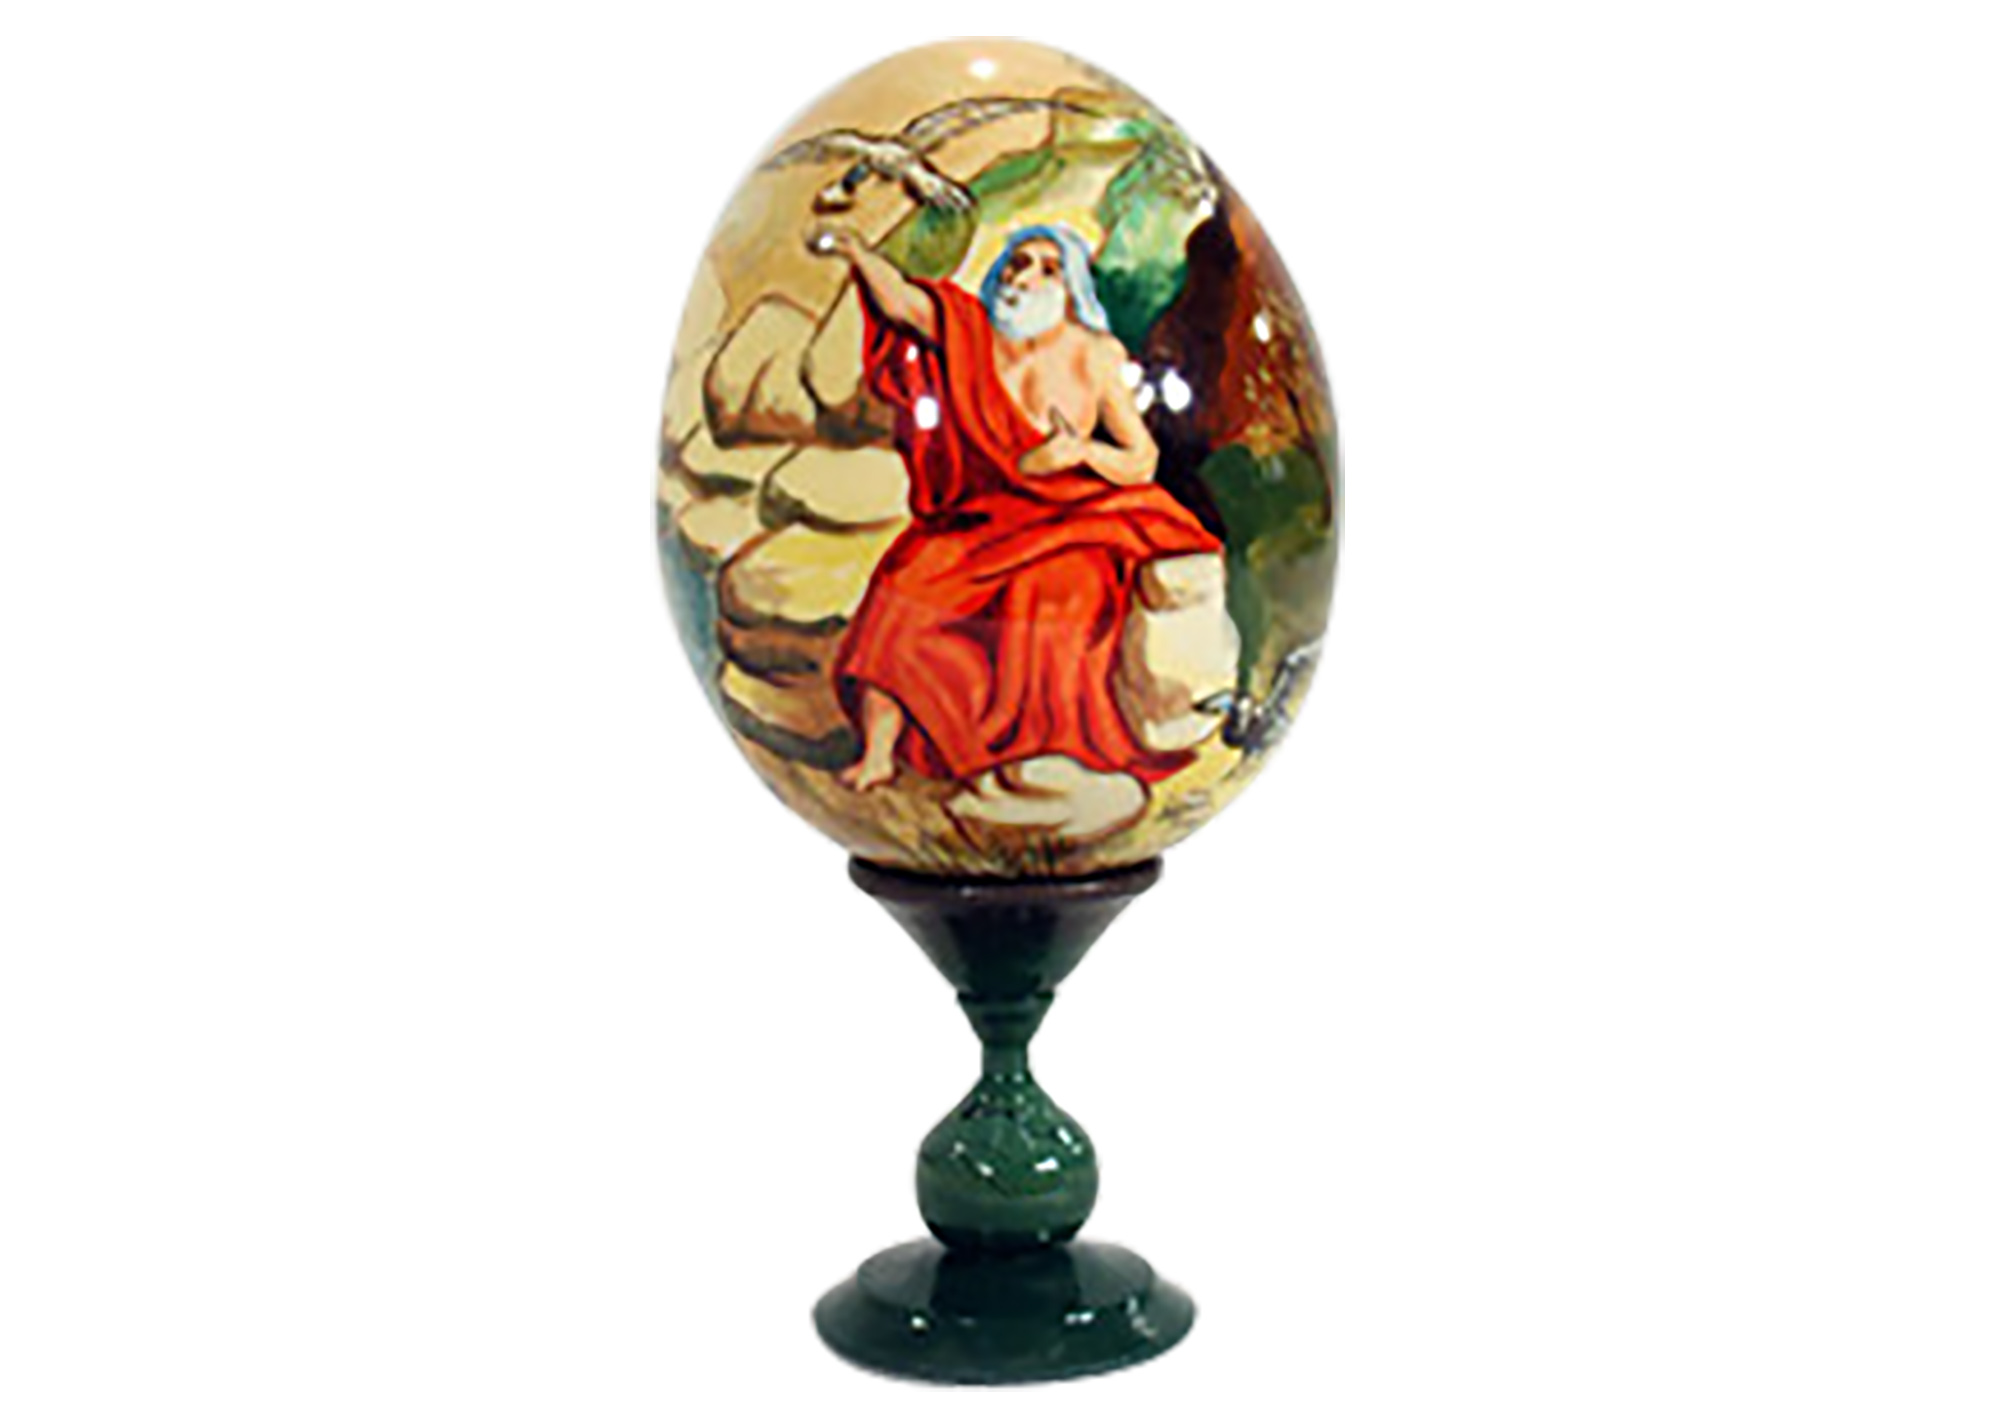 Buy Prophet Elijah Egg 4" at GoldenCockerel.com